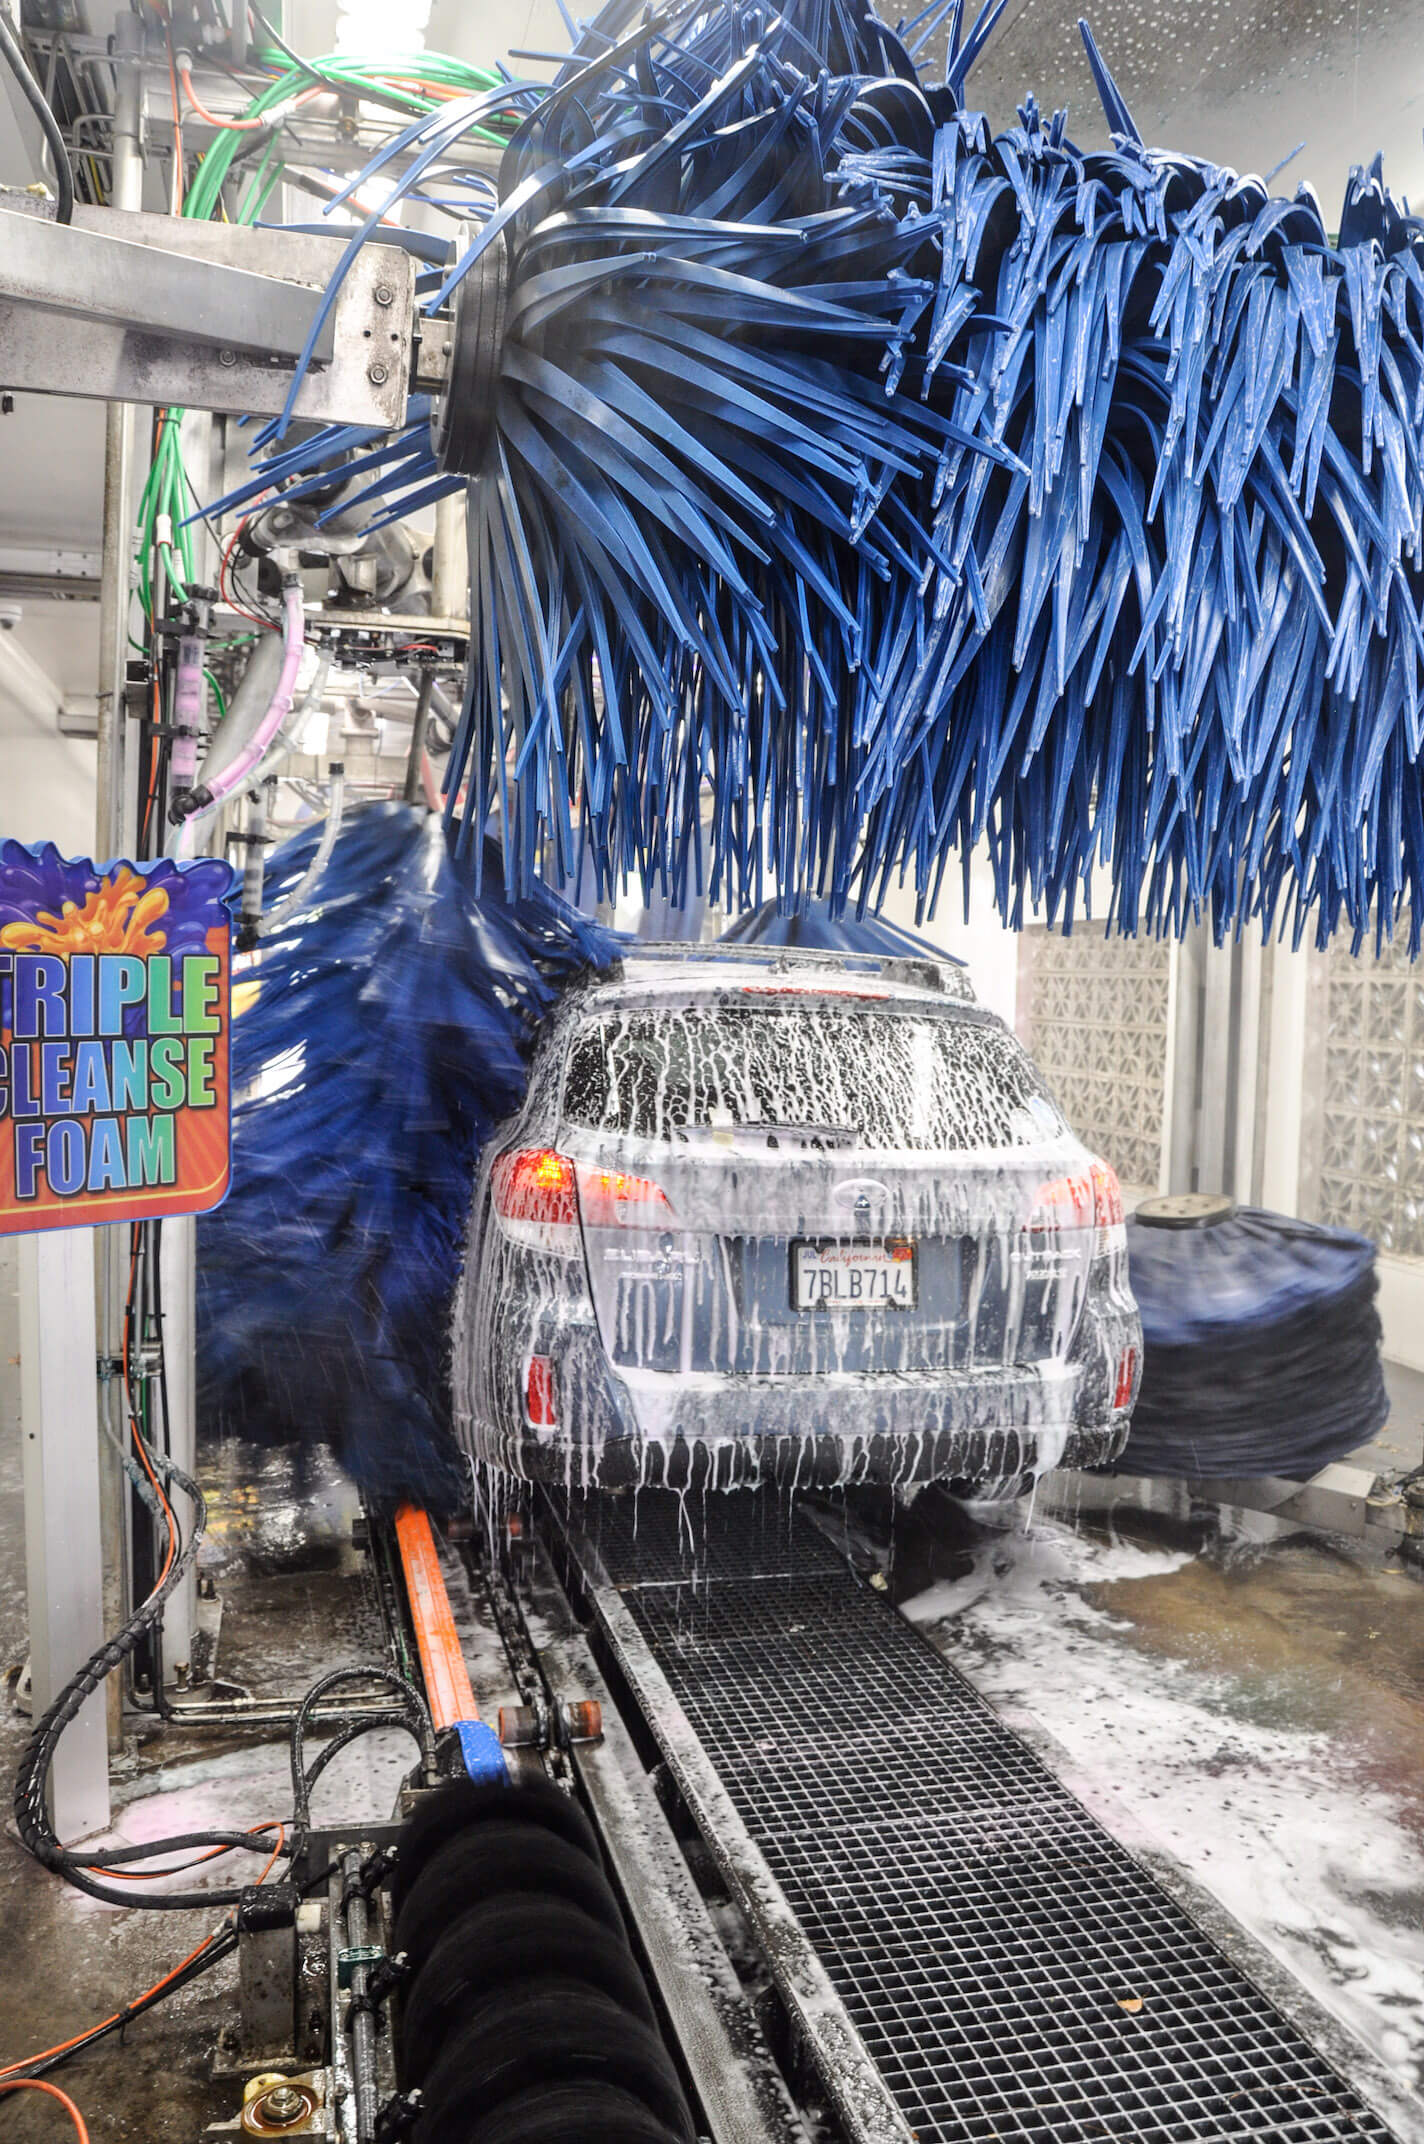 Best express car wash Los Angeles